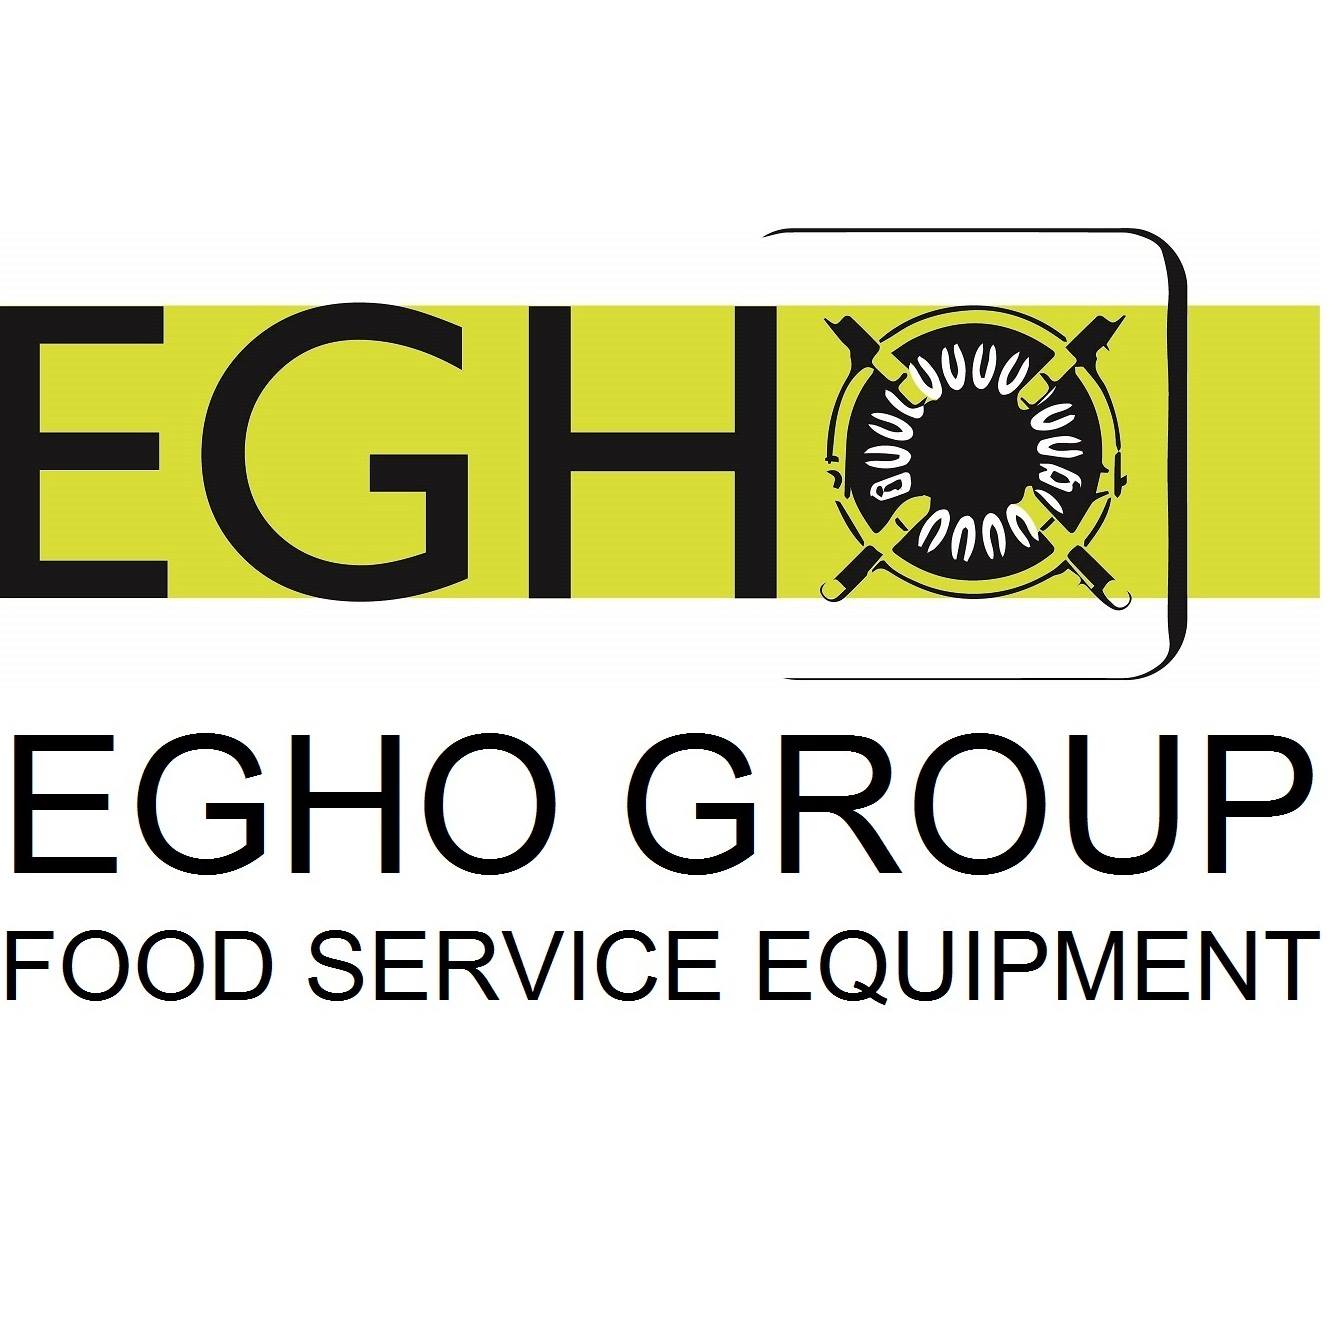 Egho Group